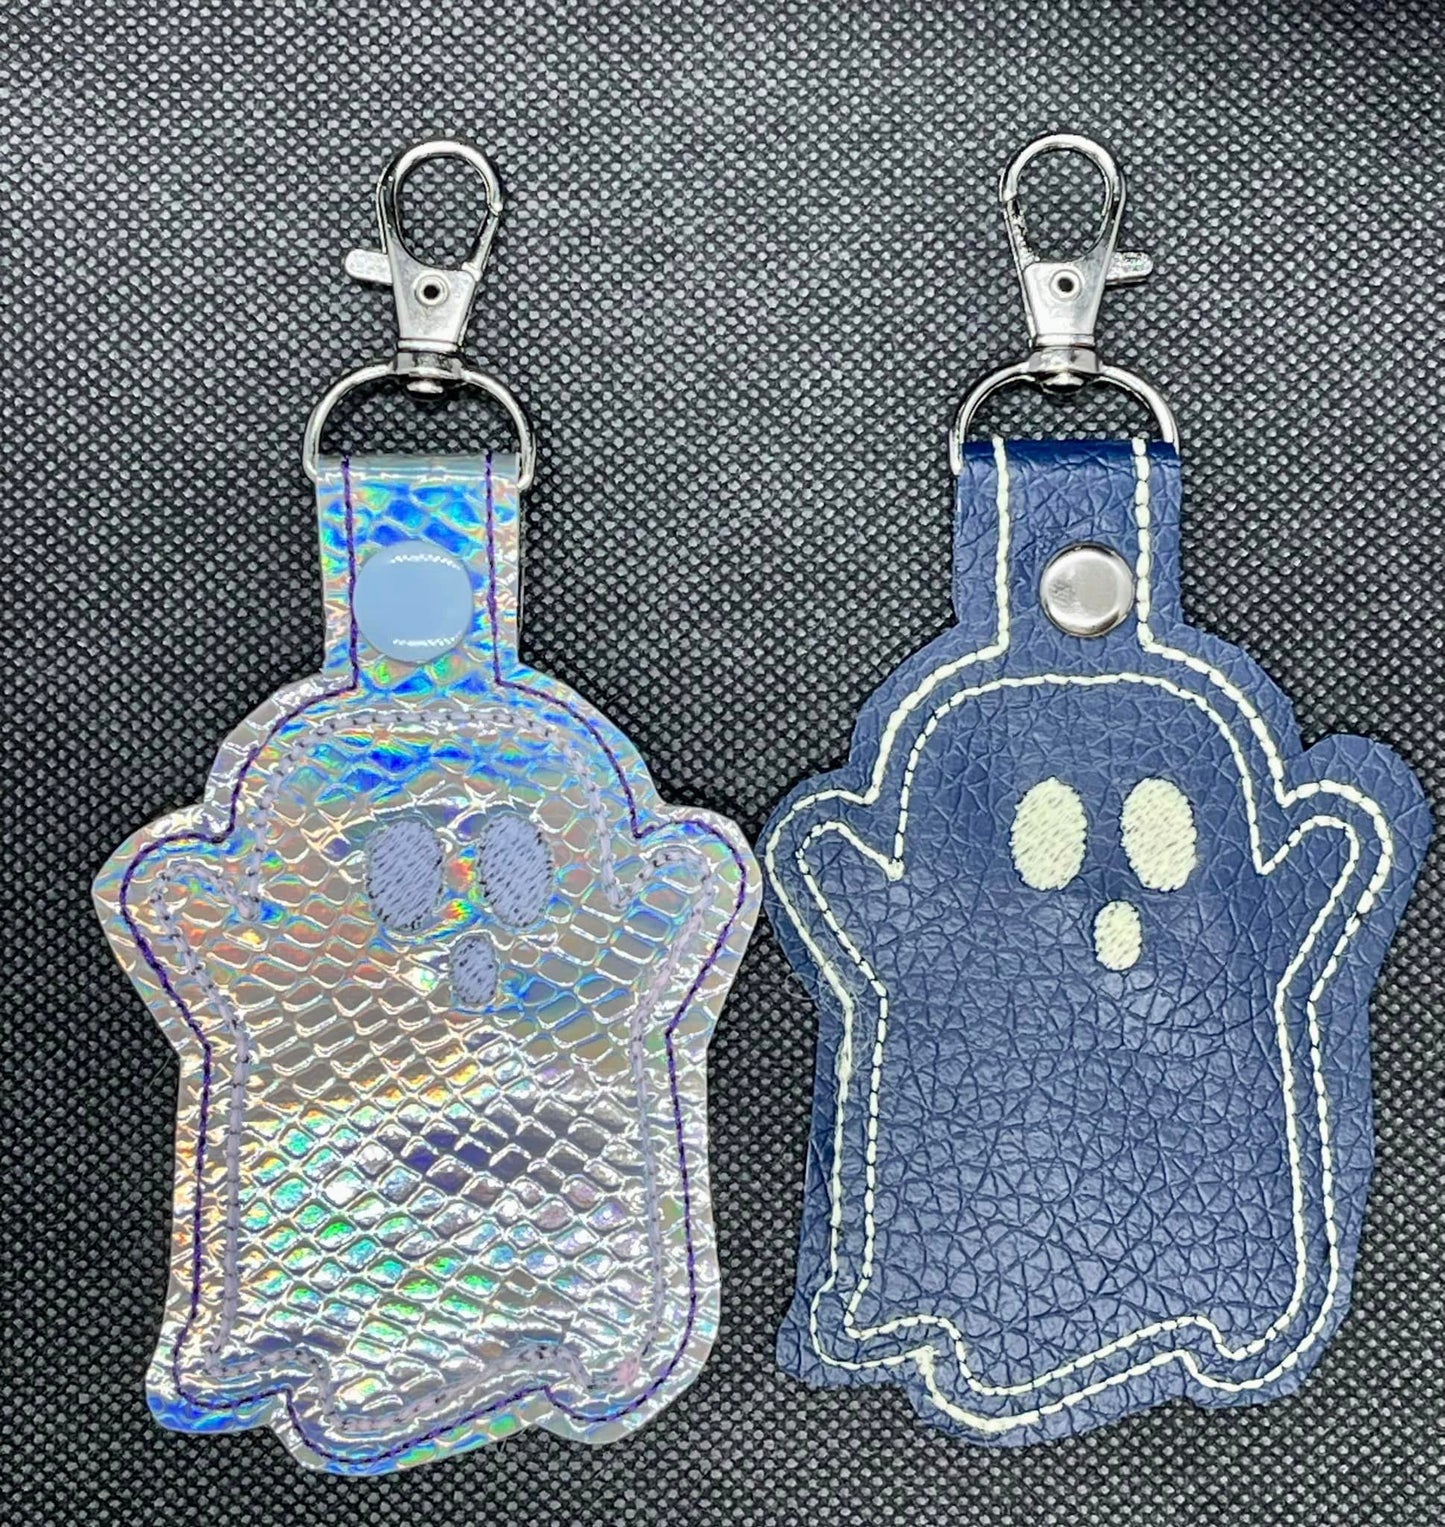 HEY Boo! Ghost KeyFob Embroidery Design